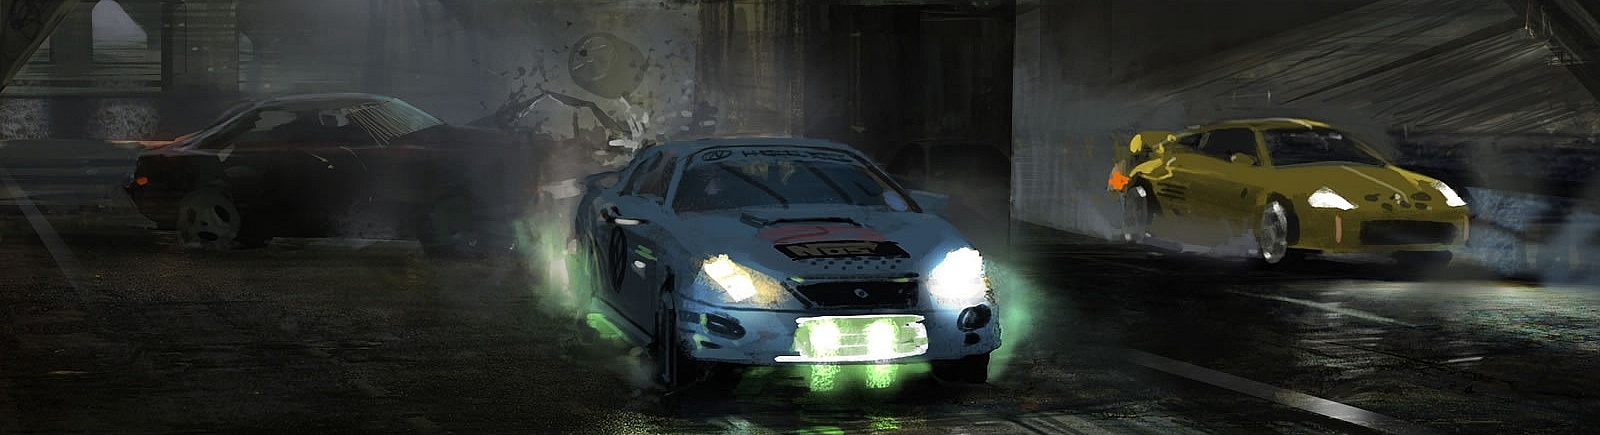 Дата выхода Need for Speed Underground (NFSU1)  на PC, PS2 и Xbox в России и во всем мире